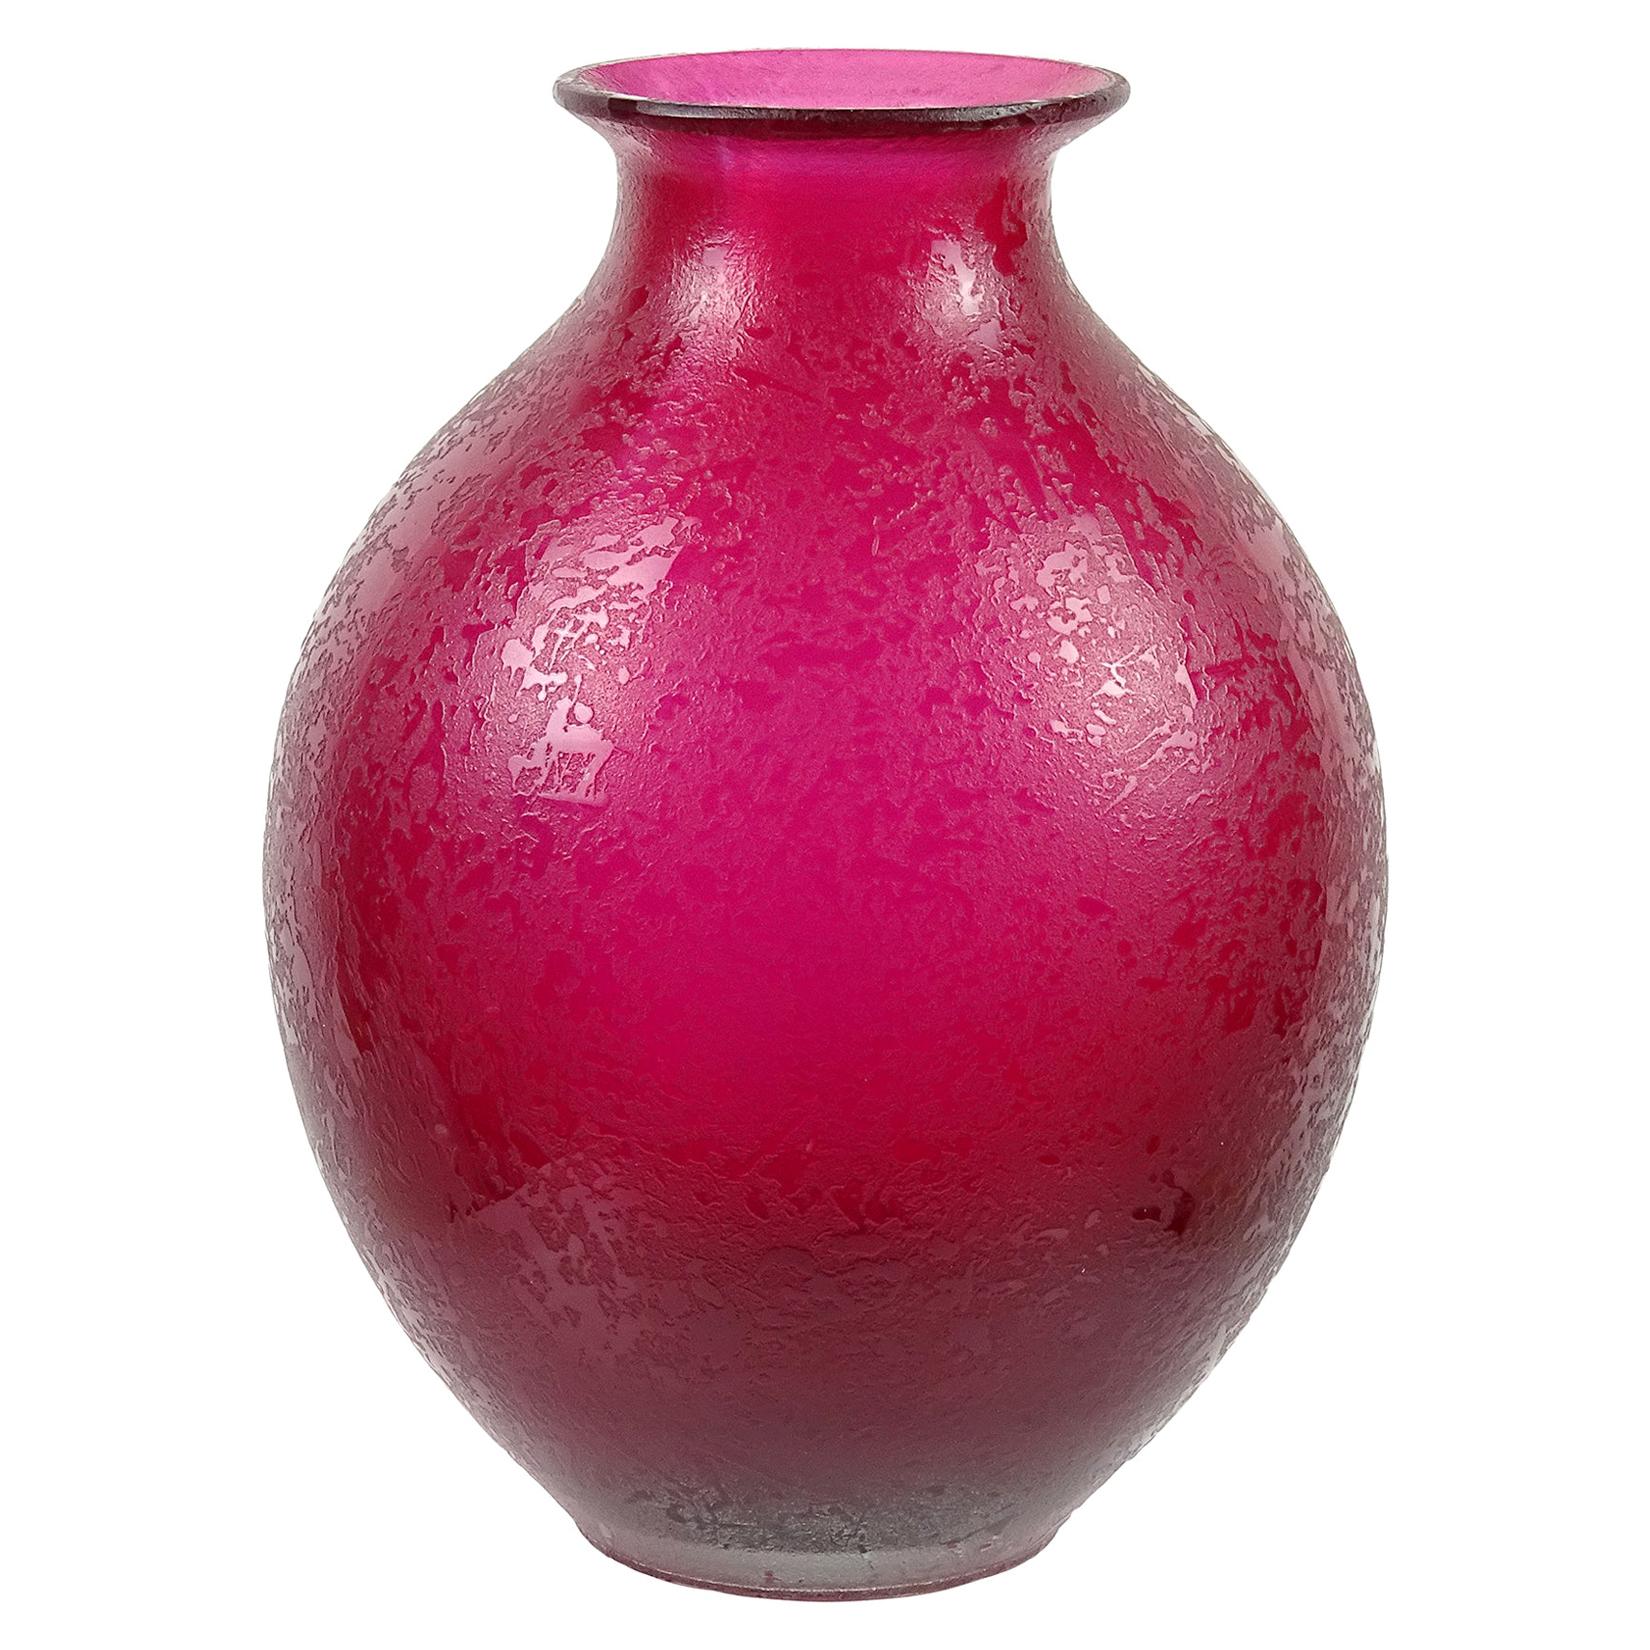 Flavio Poli Murano Fuchsia Red Corroso Surface Italian Art Glass Flower Vase